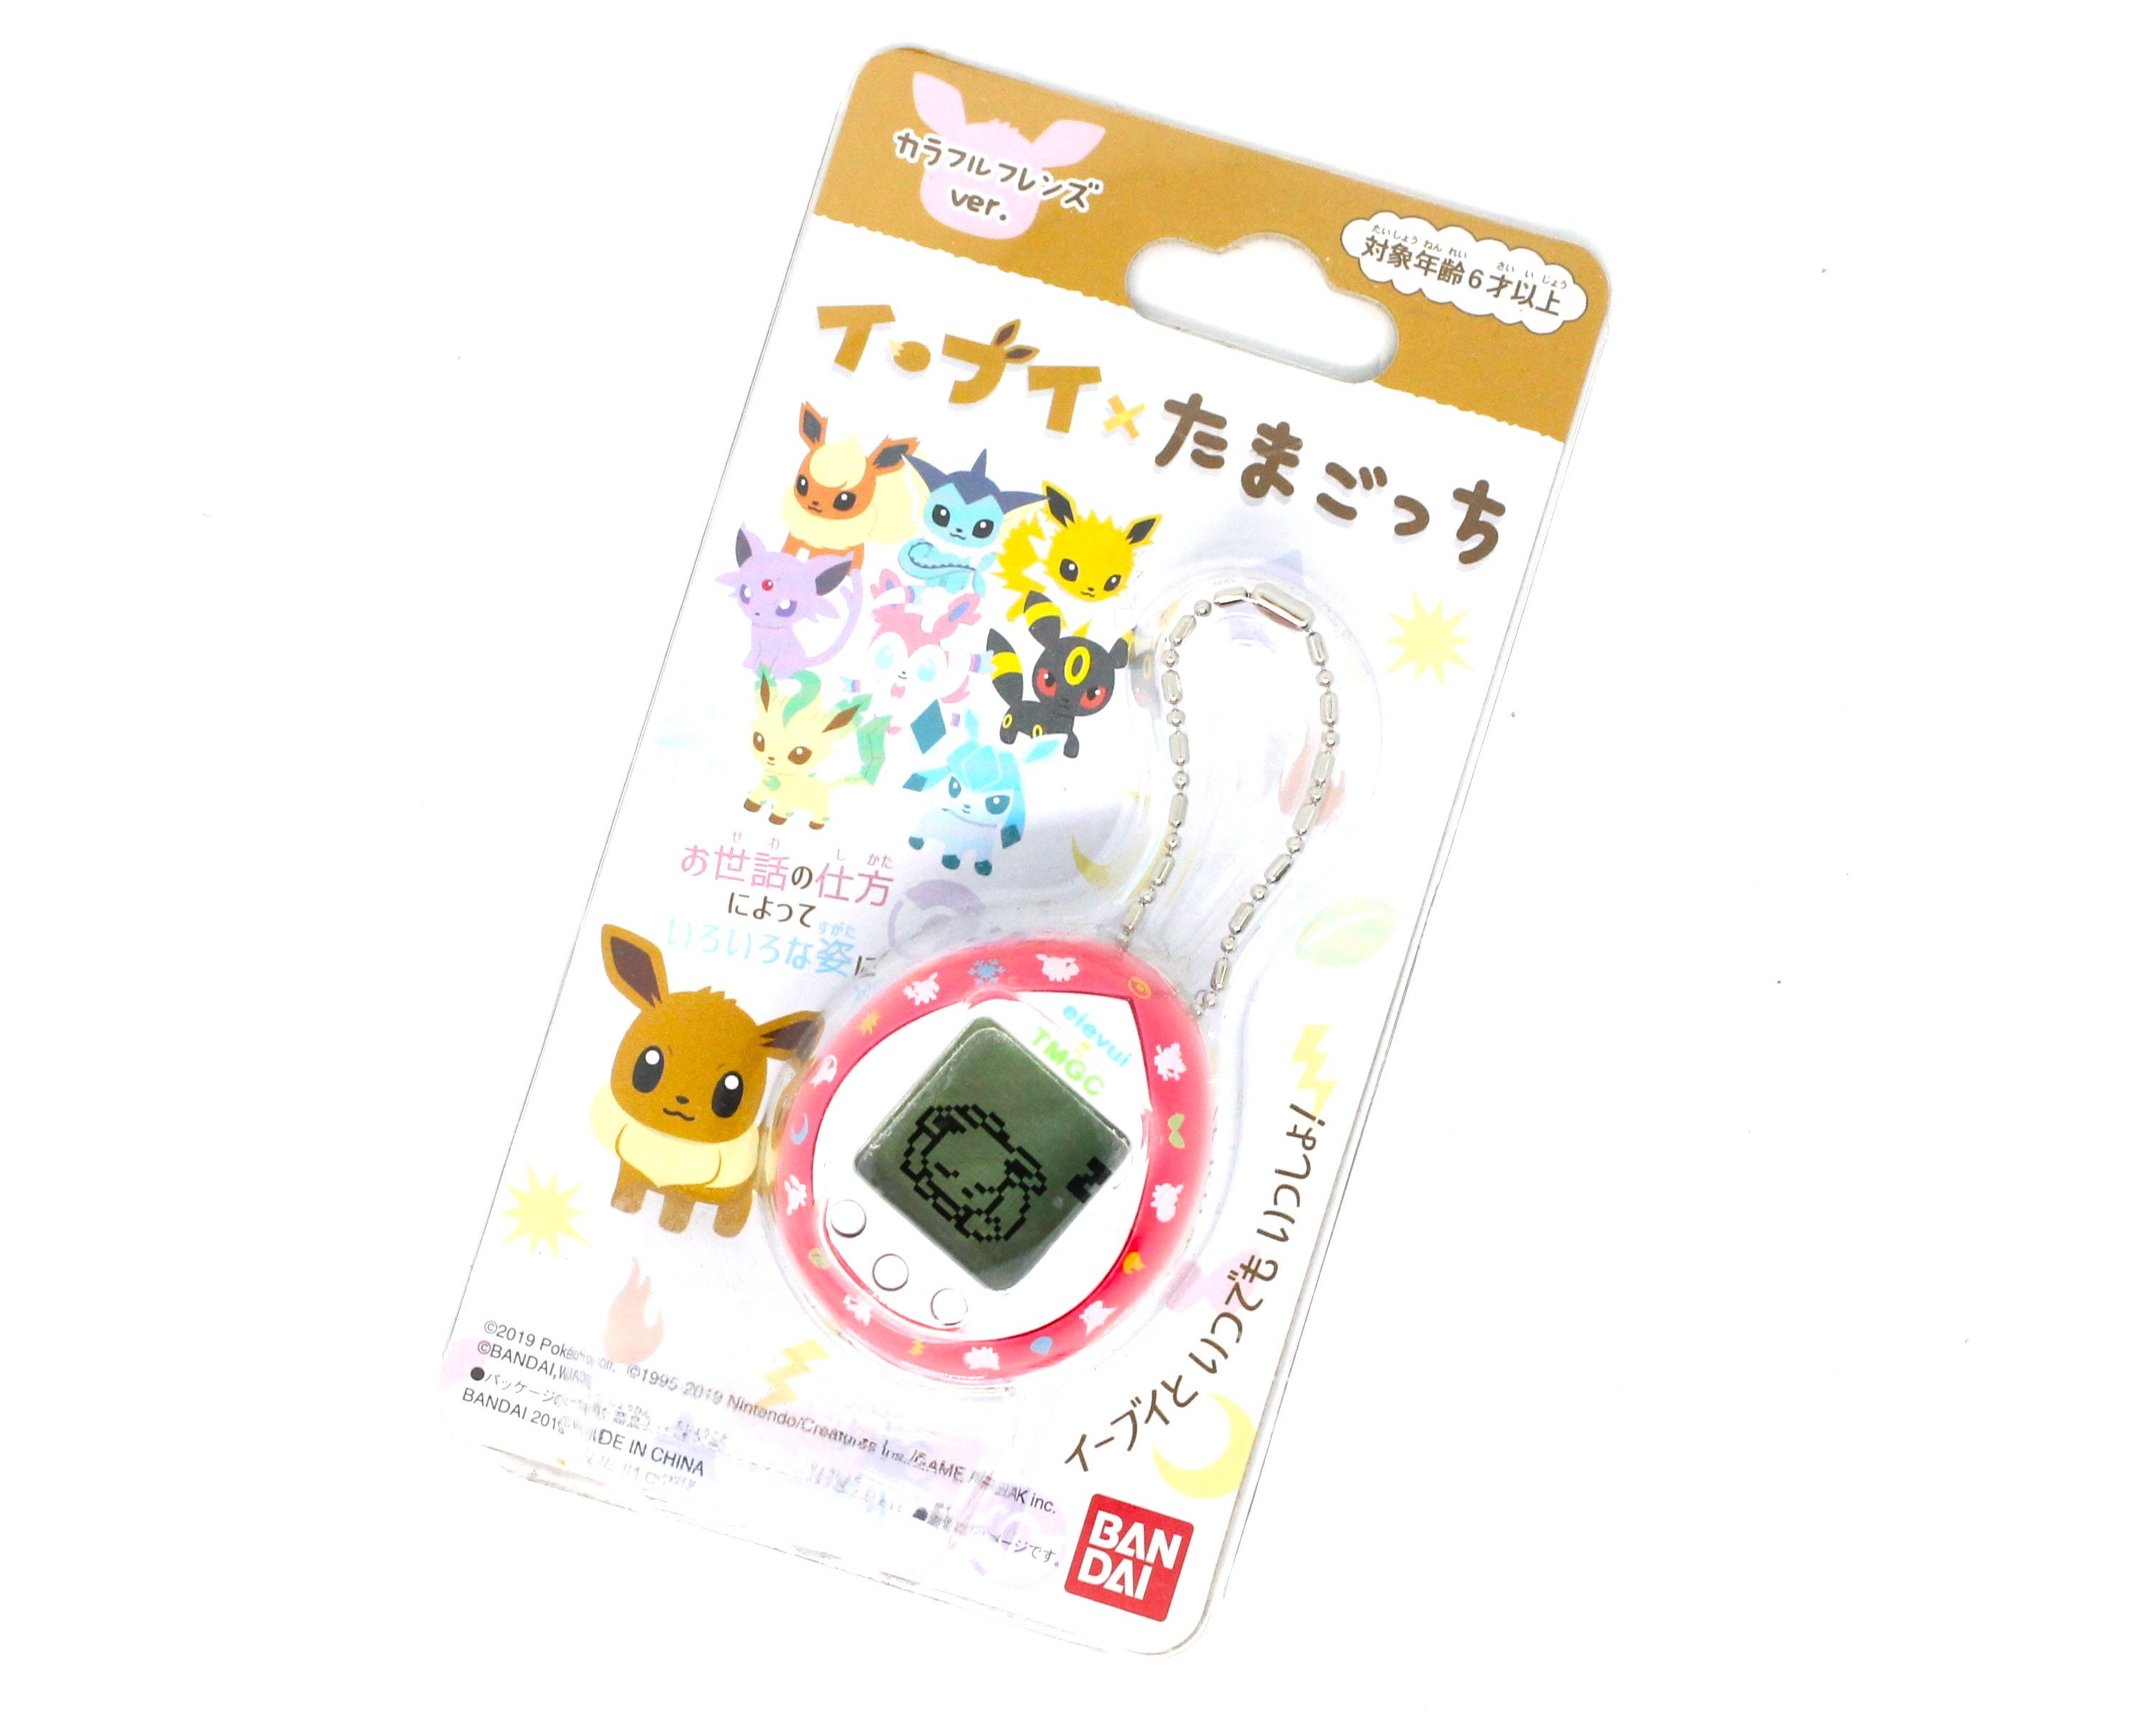 Bandai Pokemon Eevee × Tamagotchi Colorful friends ver. Yellow Digital pet  New